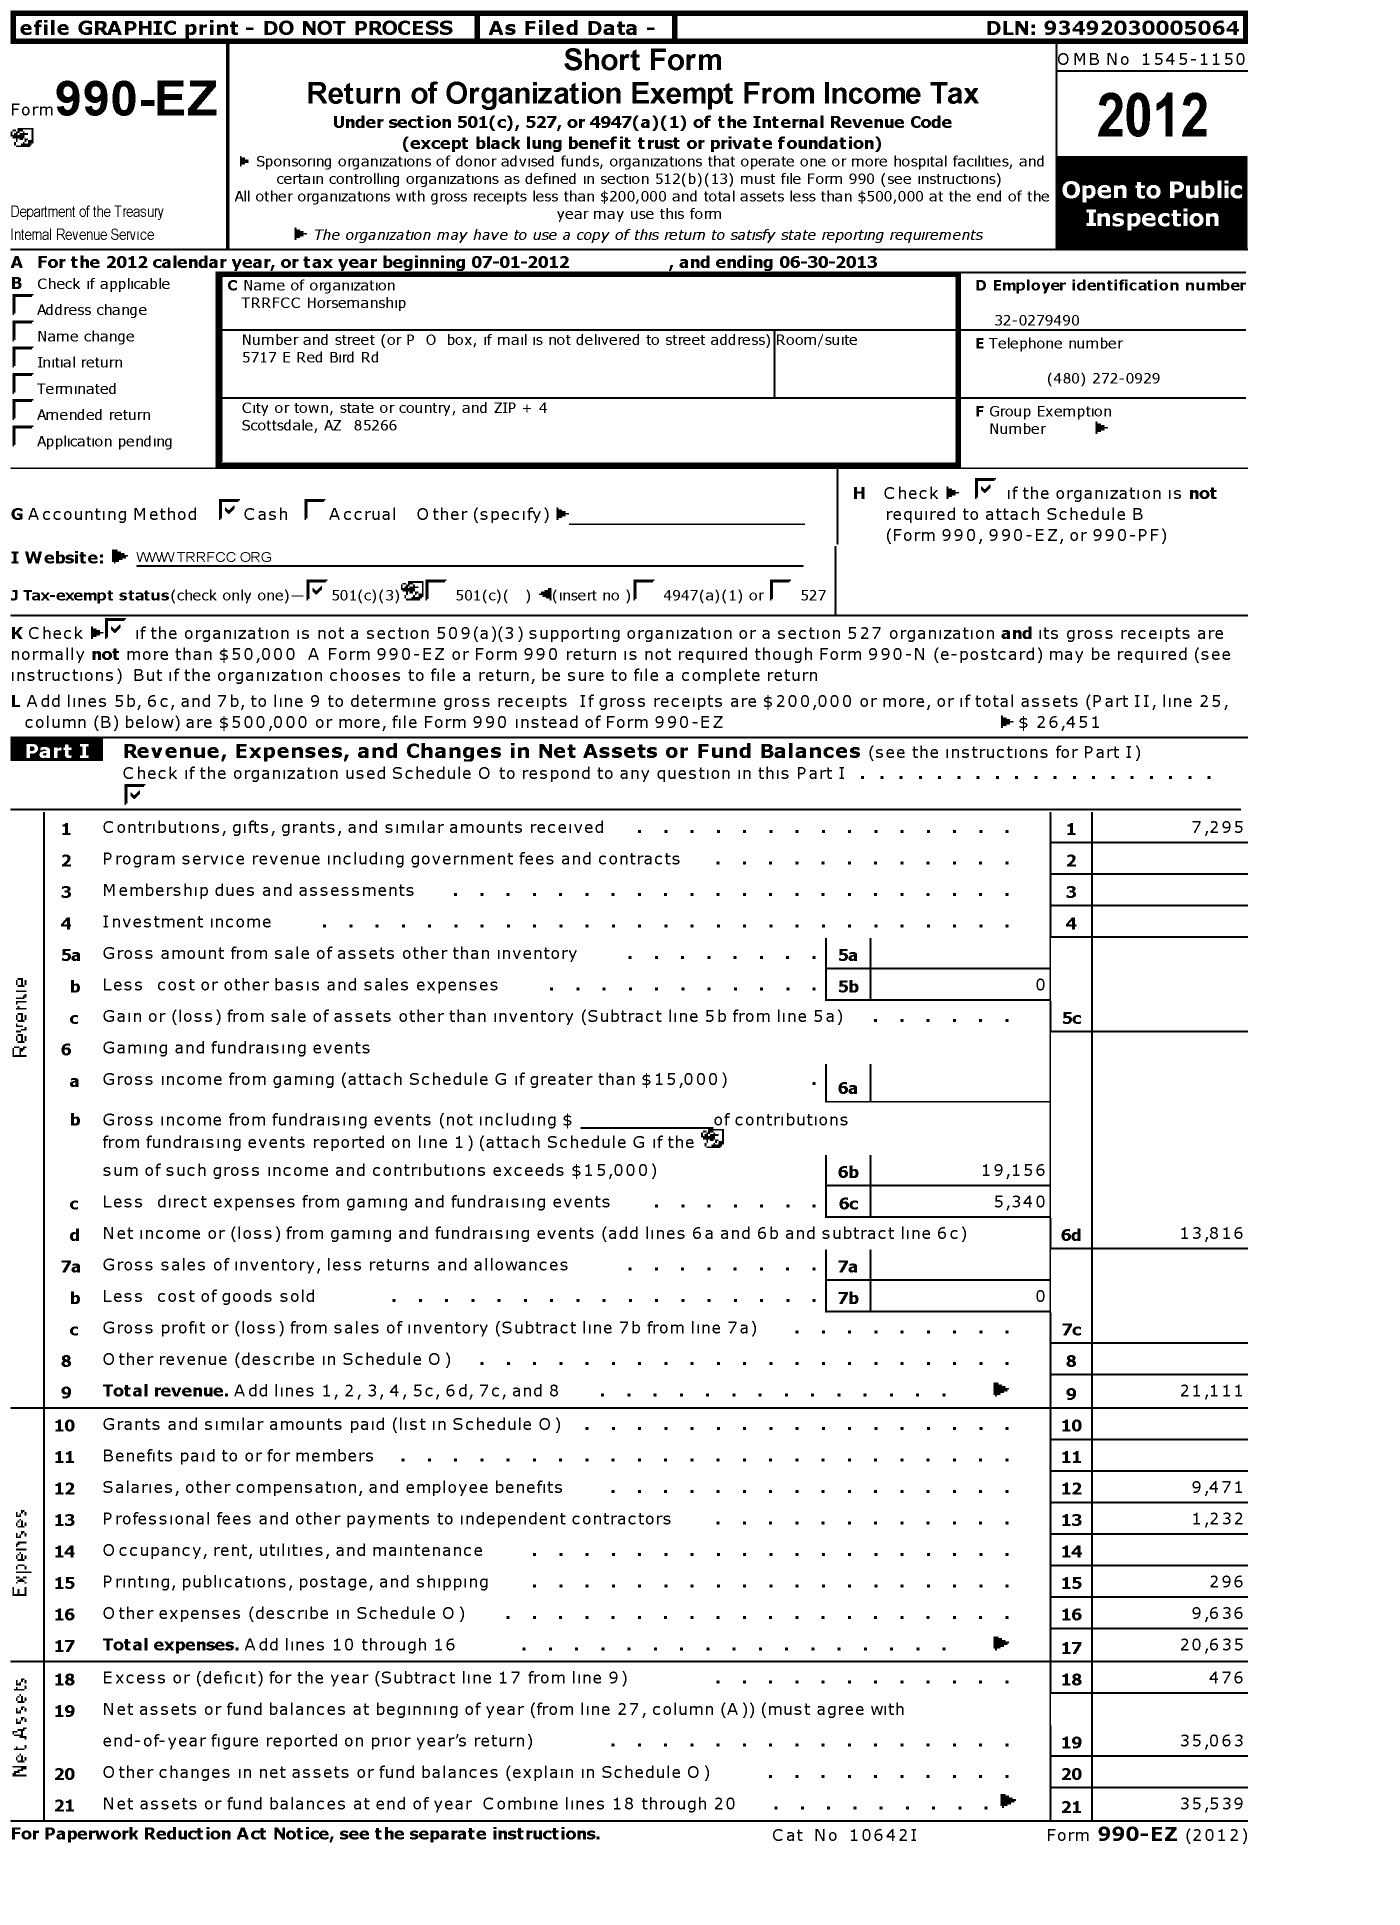 Image of first page of 2012 Form 990EZ for TRRFCC Horsemanship